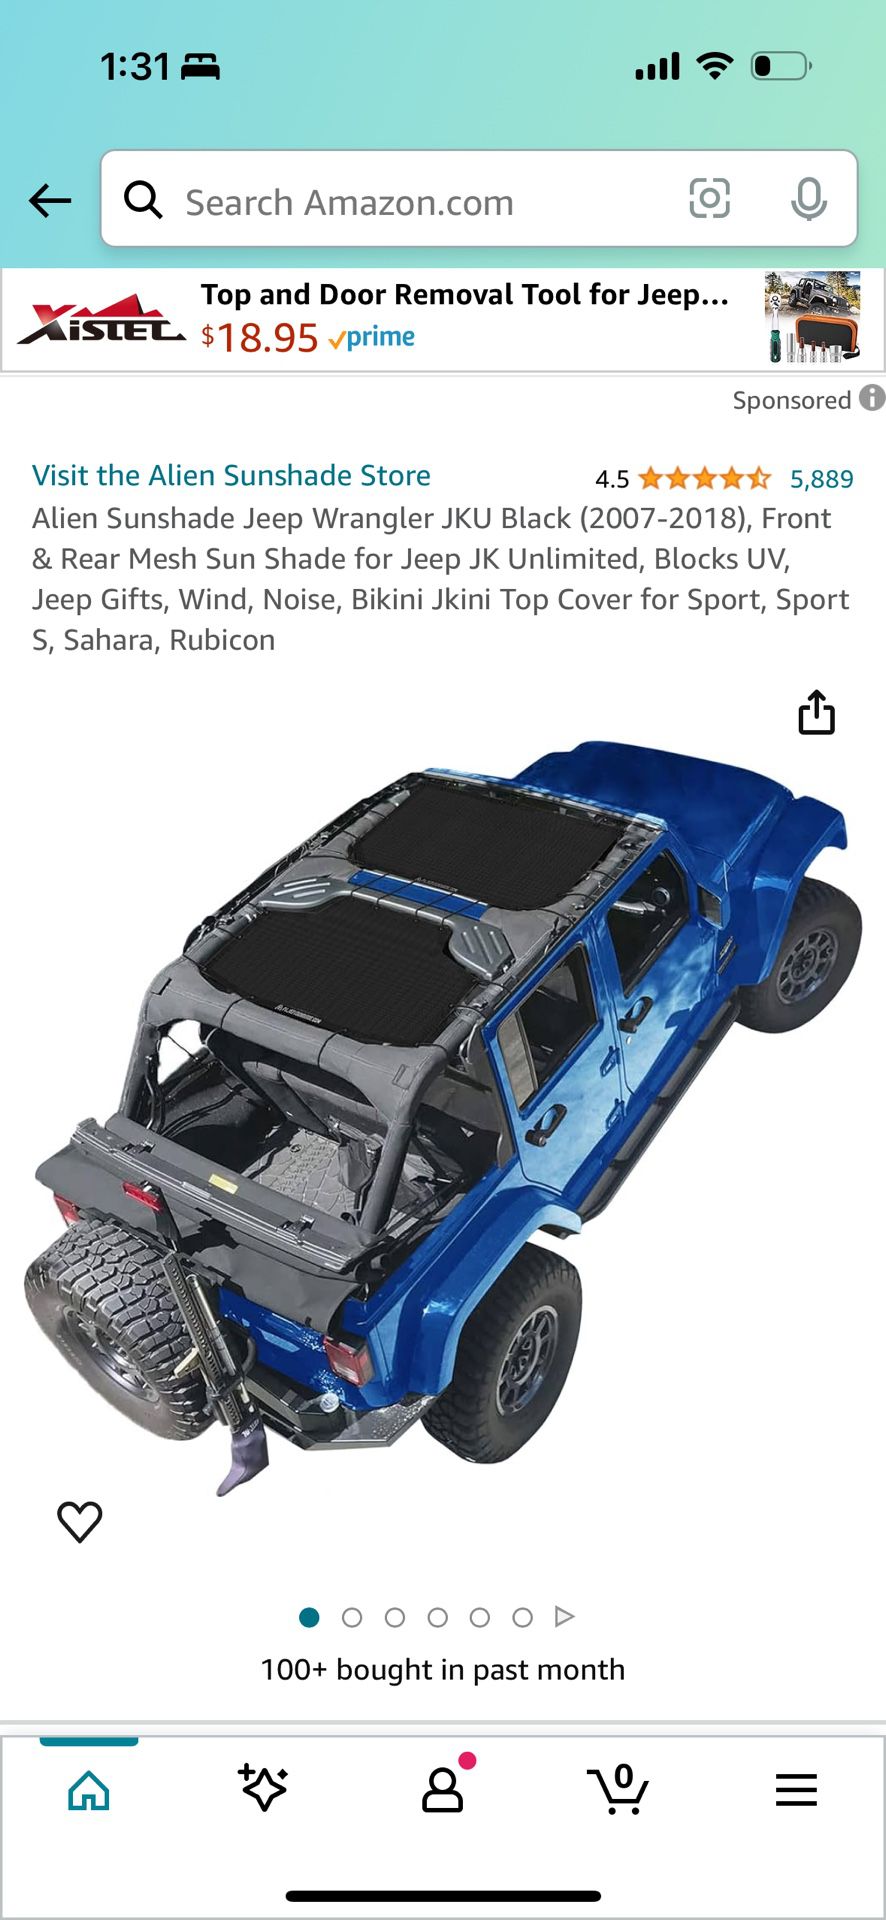 Alien Sunshade Jeep Wrangler JKU Black (2007-2018), Front & Rear Mesh Sun Shade for Jeep JK Unlimited, Blocks UV, Jeep Gifts, Wind, Noise, Bikini Jkin